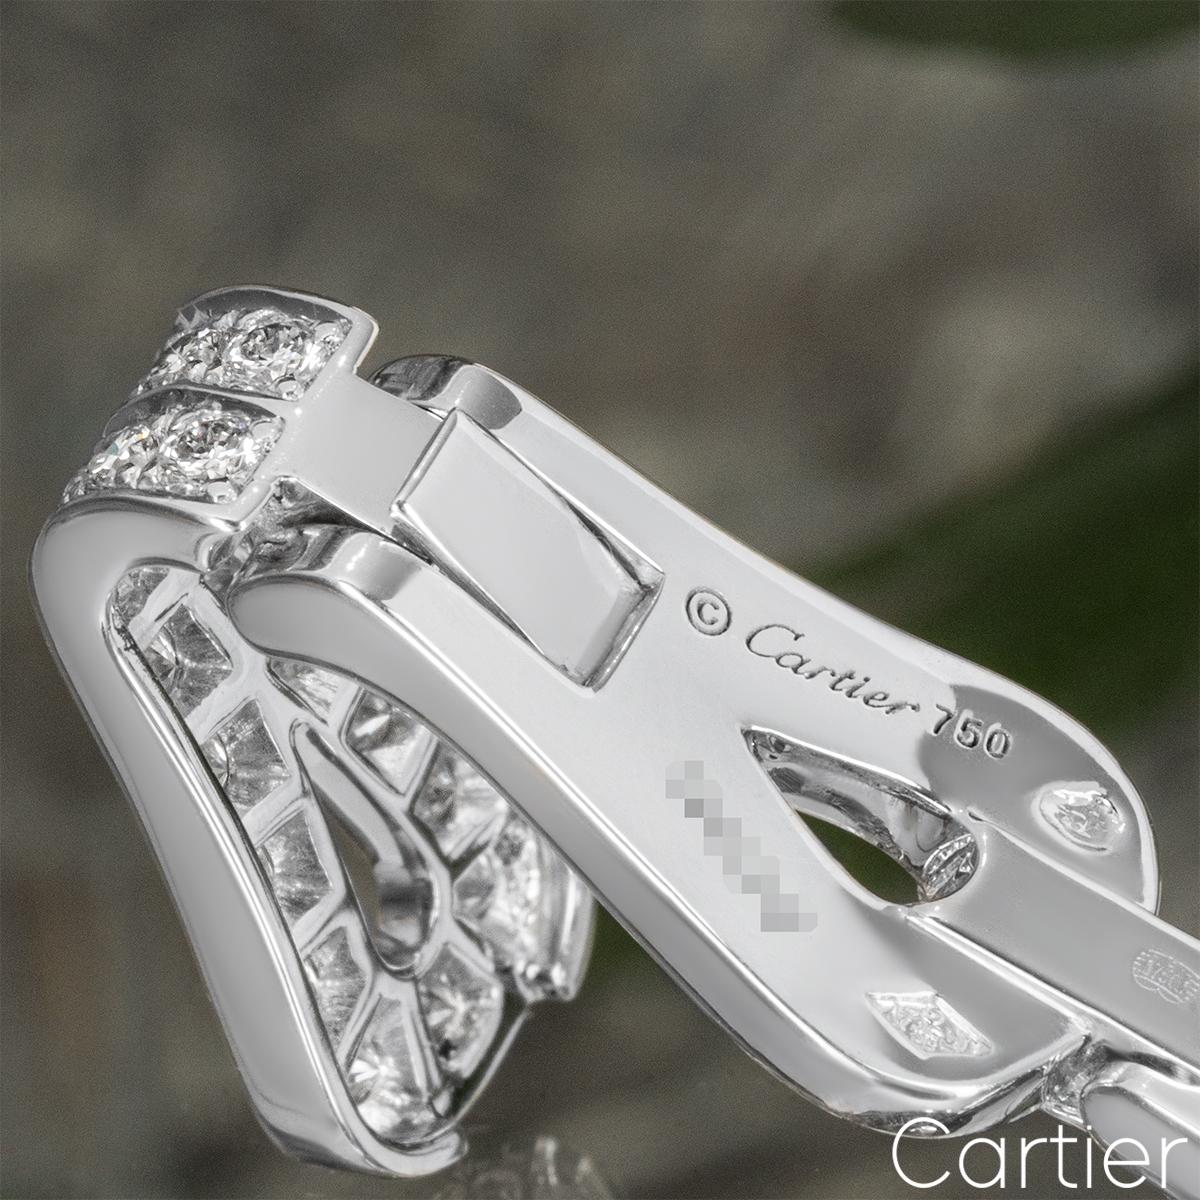 Cartier White Gold Diamond Agrafe Bracelet Watch 2